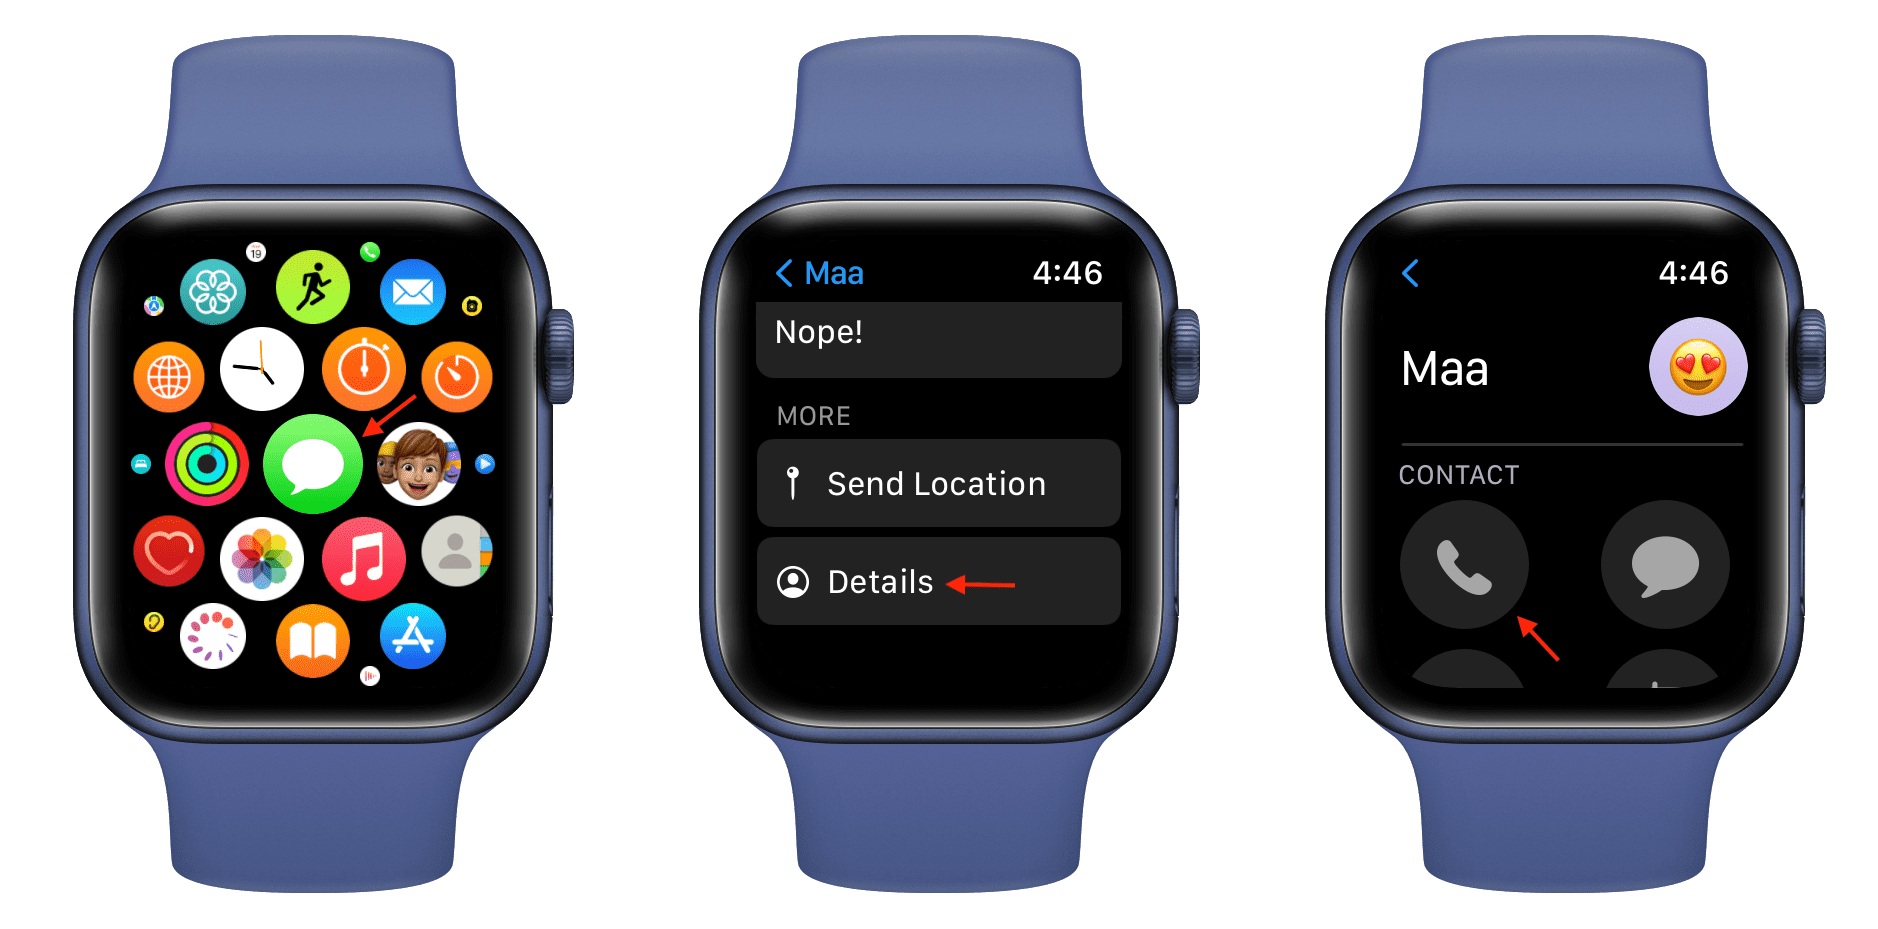 Start FaceTime call on Apple Watch via Messages app